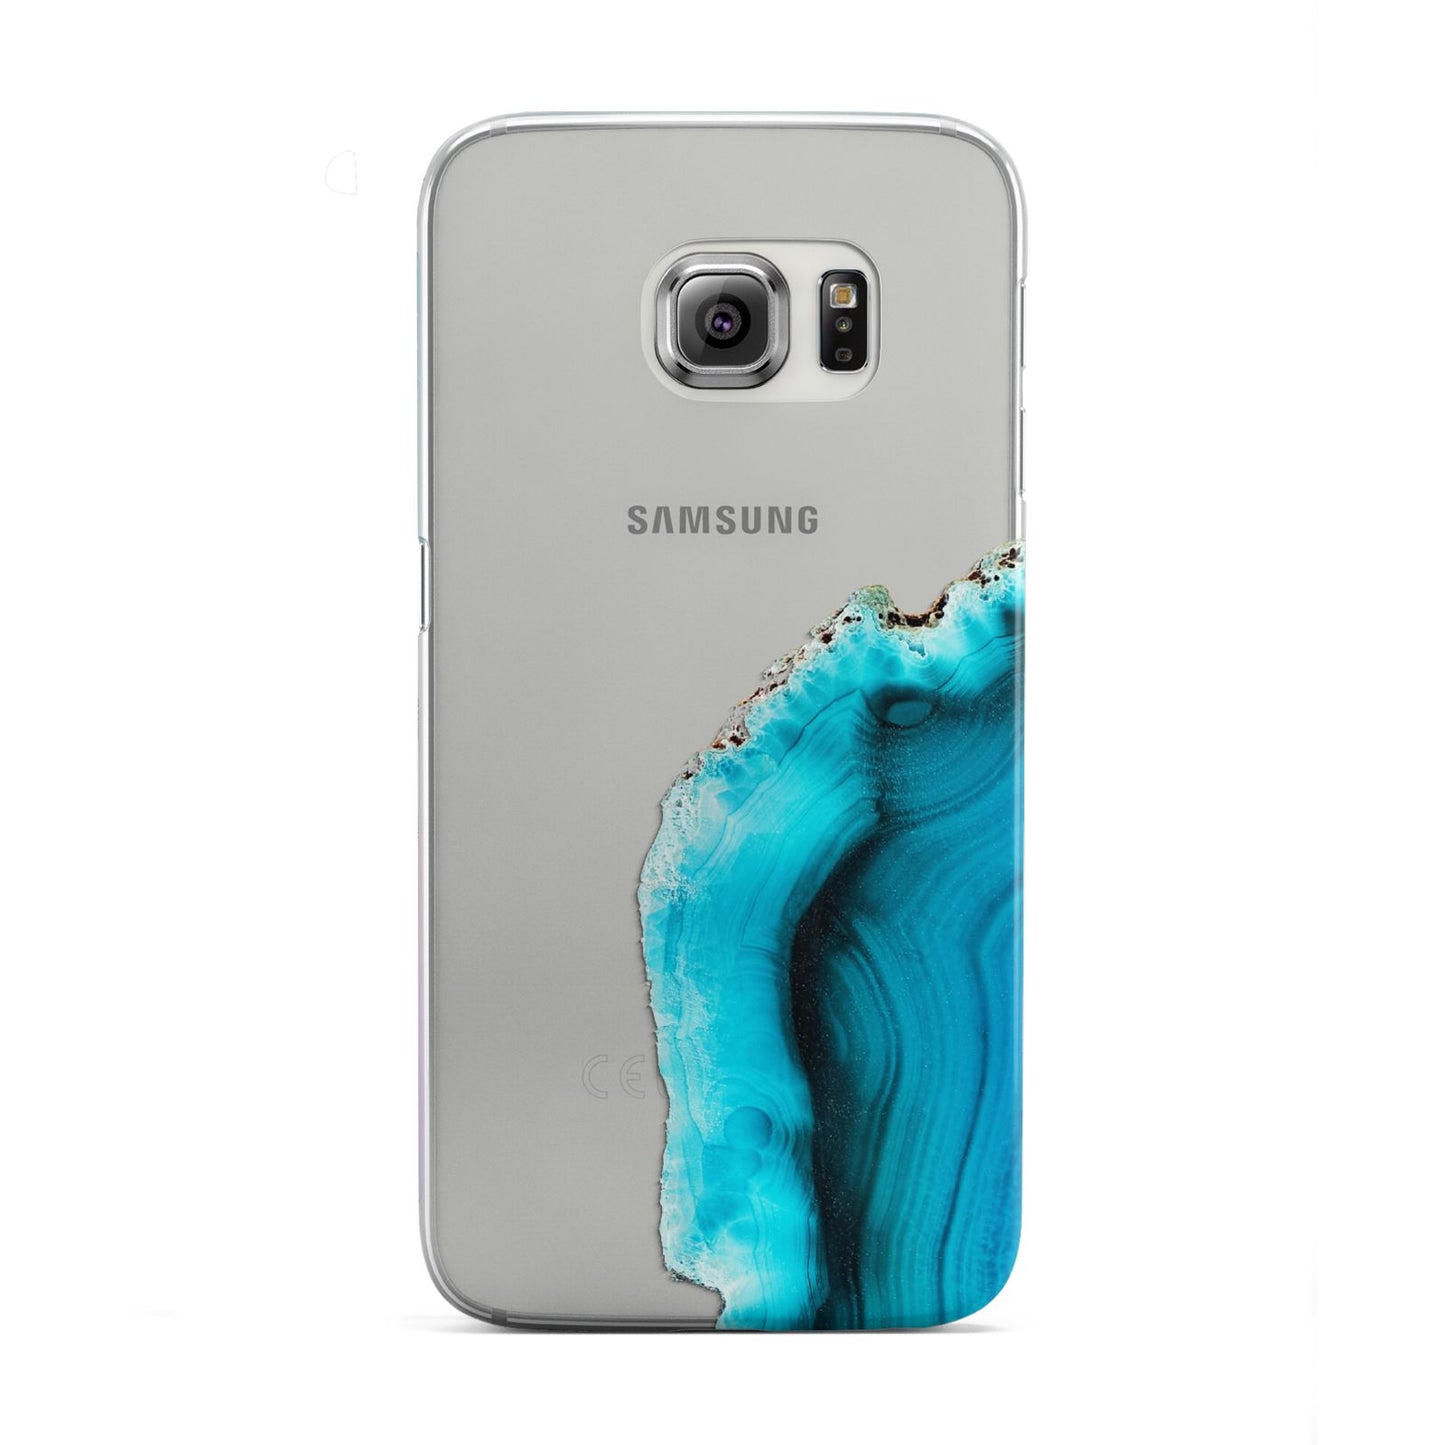 Agate Blue Turquoise Samsung Galaxy S6 Edge Case